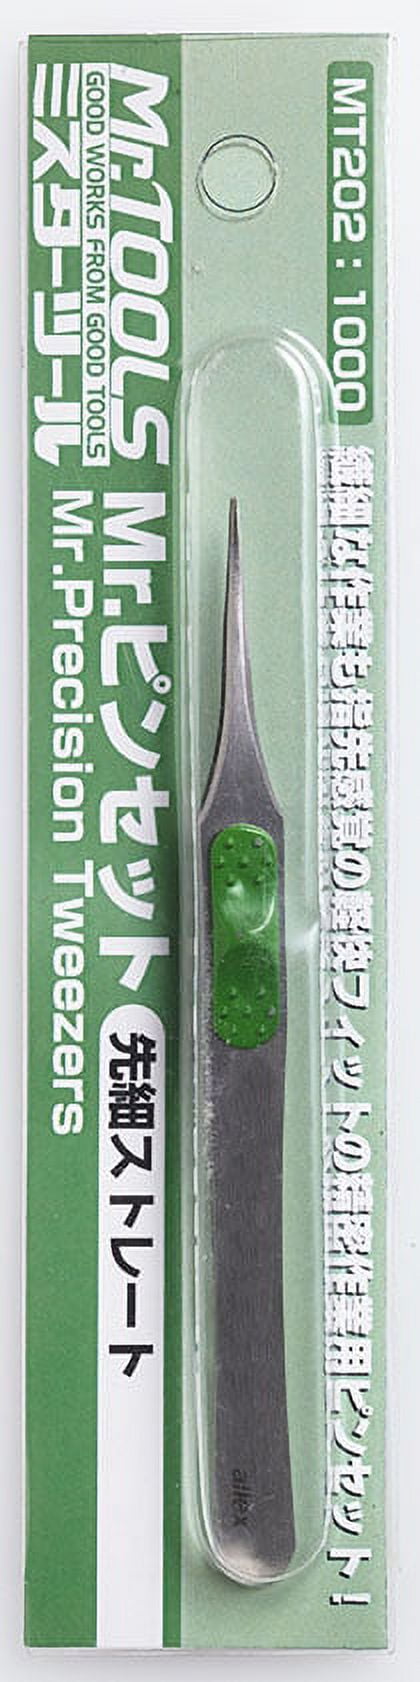 GSI Creos Mr. Hobby MT202 Tool Precision Tweezers 